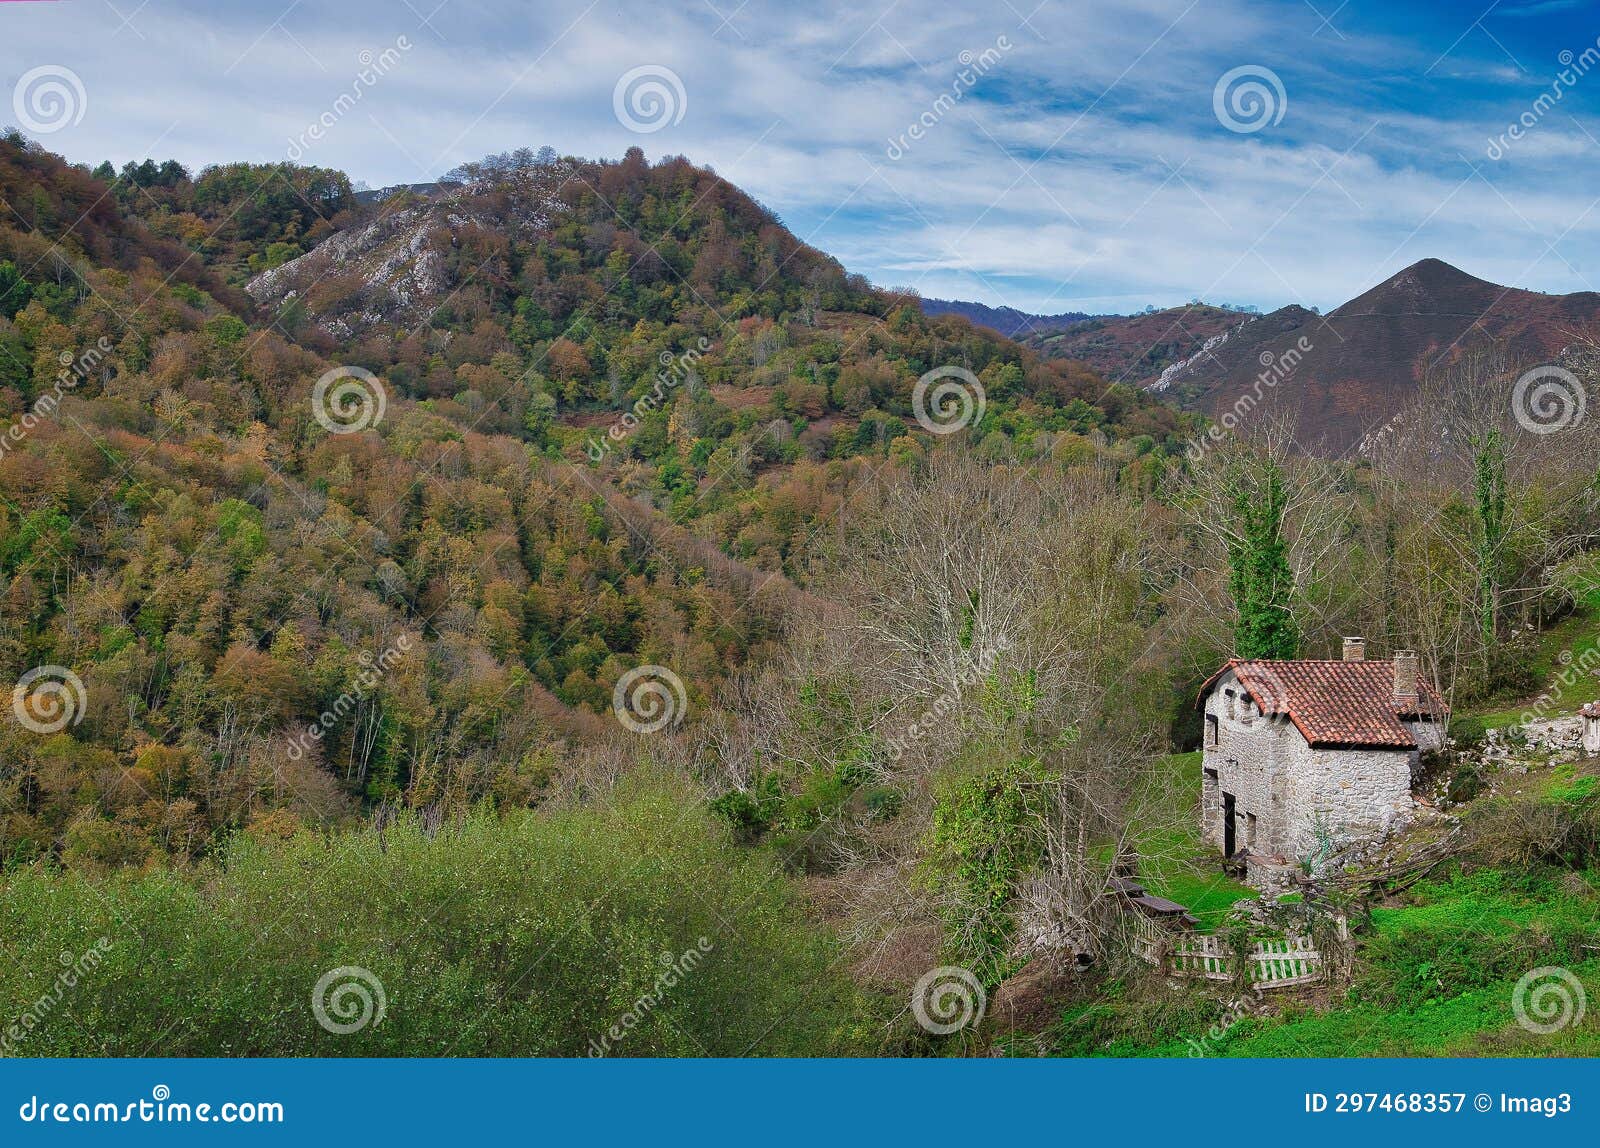 house at xonxerra village, redes natural park and biosphere reserve, asturias, spain